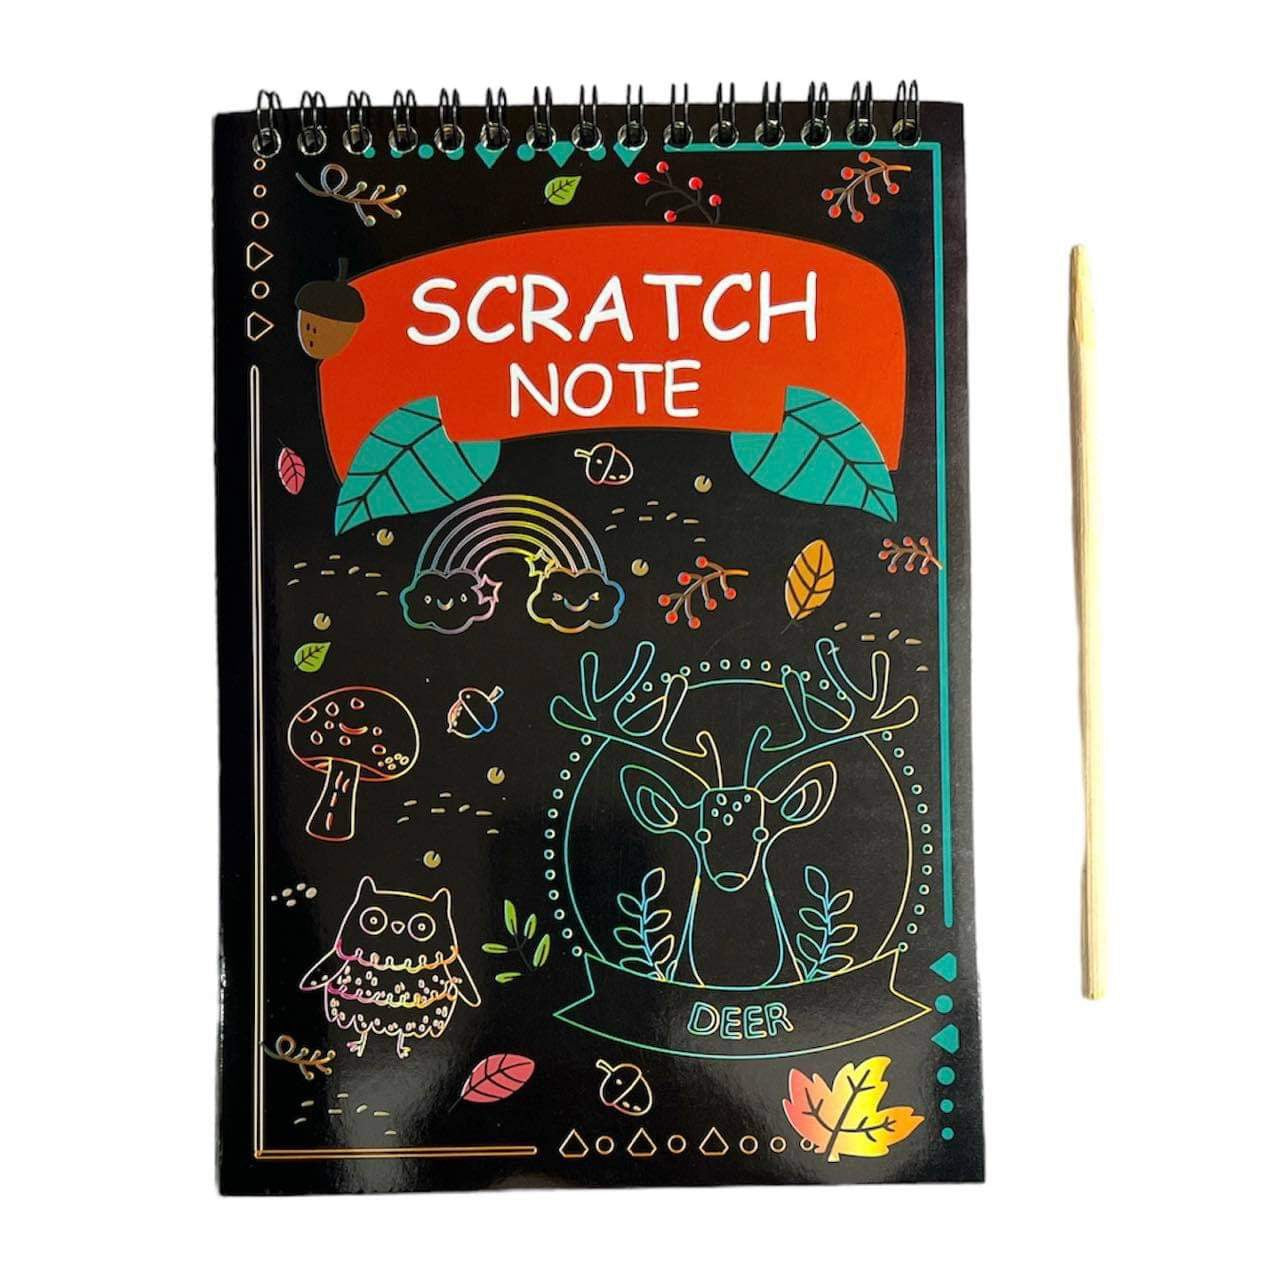 Scratch Note Large Size || كراسة خدش للبنات حجم كبير